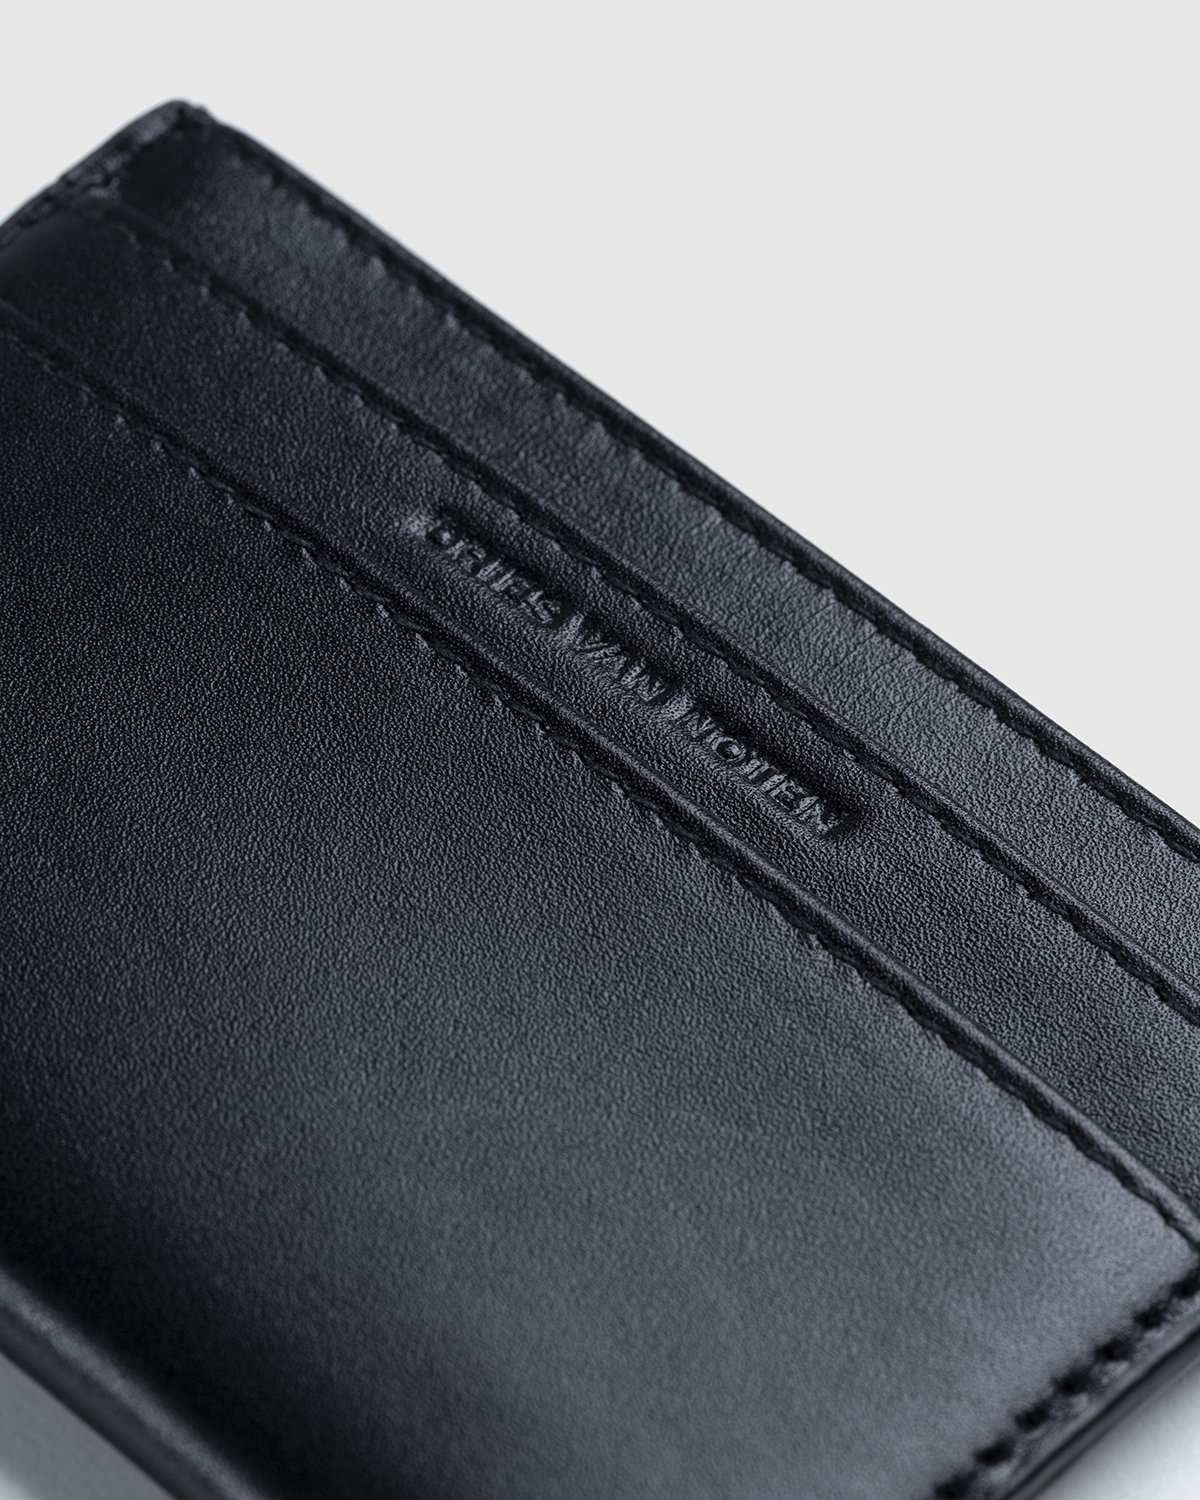 Dries van Noten – Leather Card Holder Black - Wallets - Black - Image 3